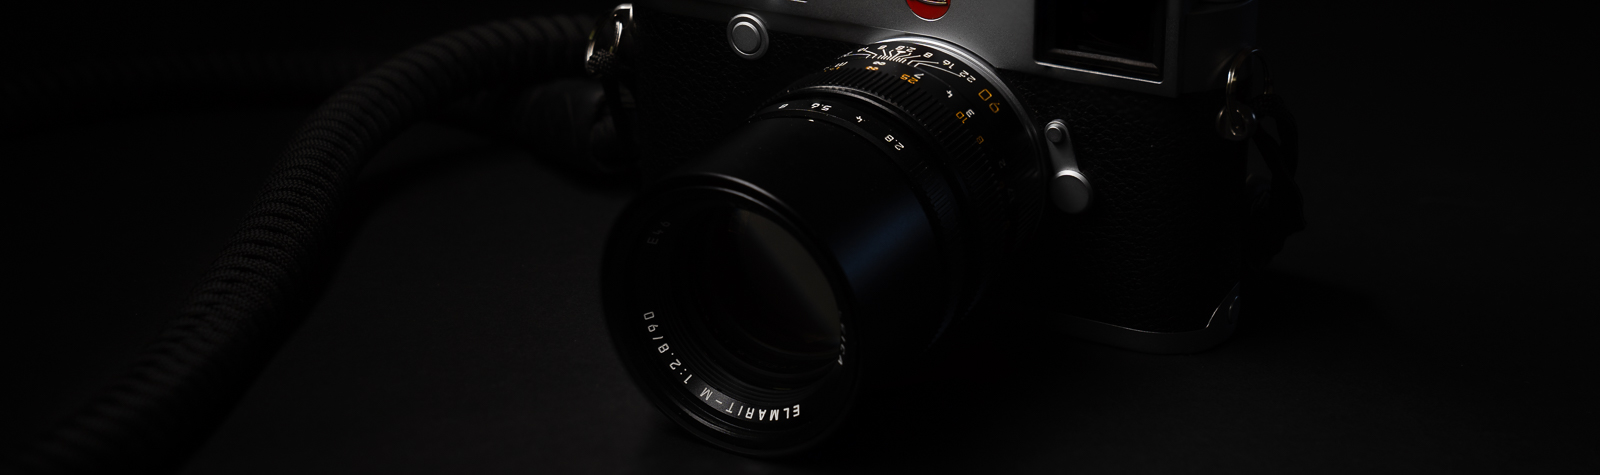 Leica Elmarit 90mm f/2.8 Review